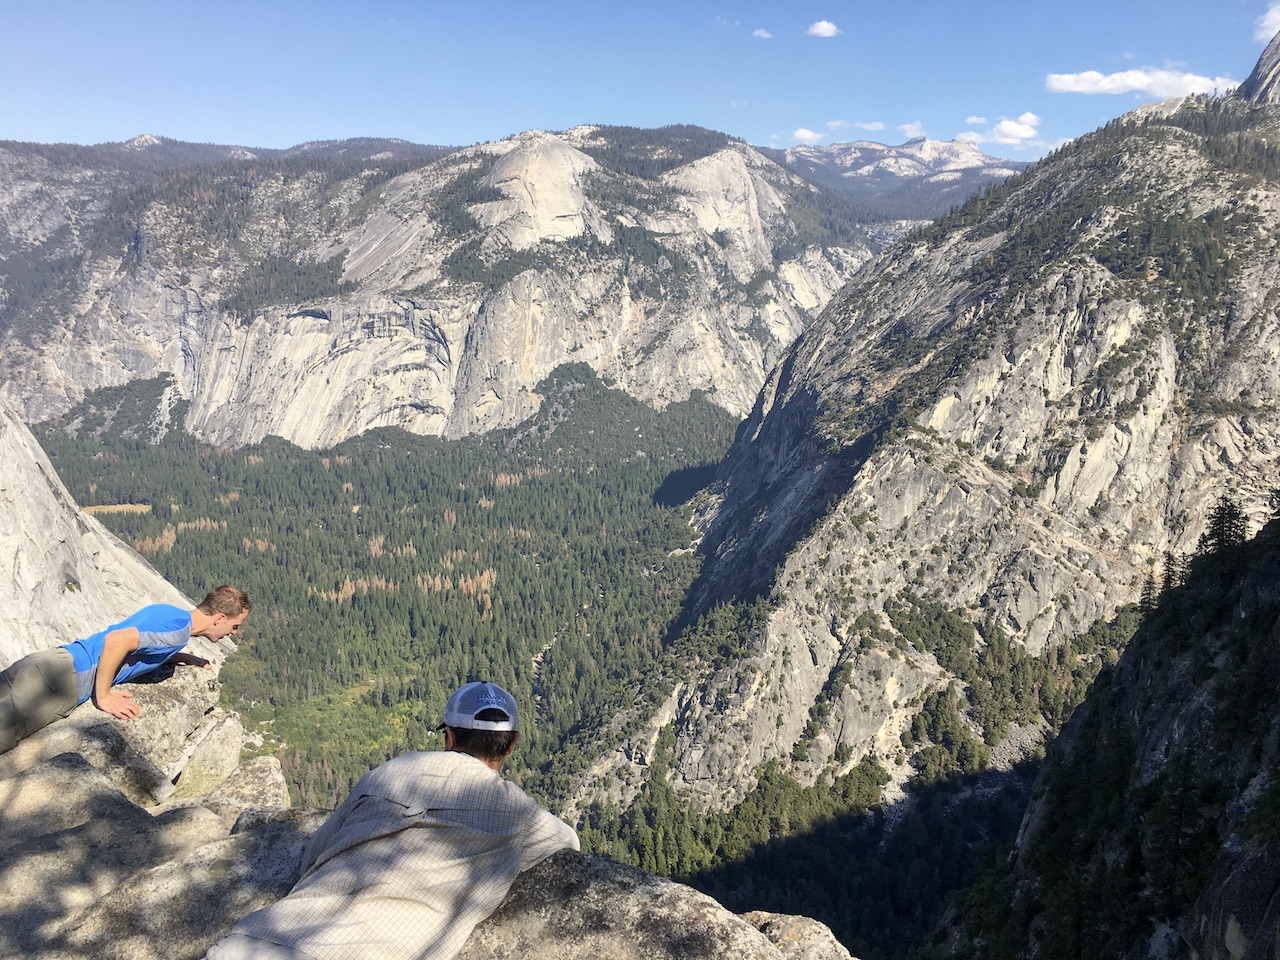 Looking down into Yosemite Valley